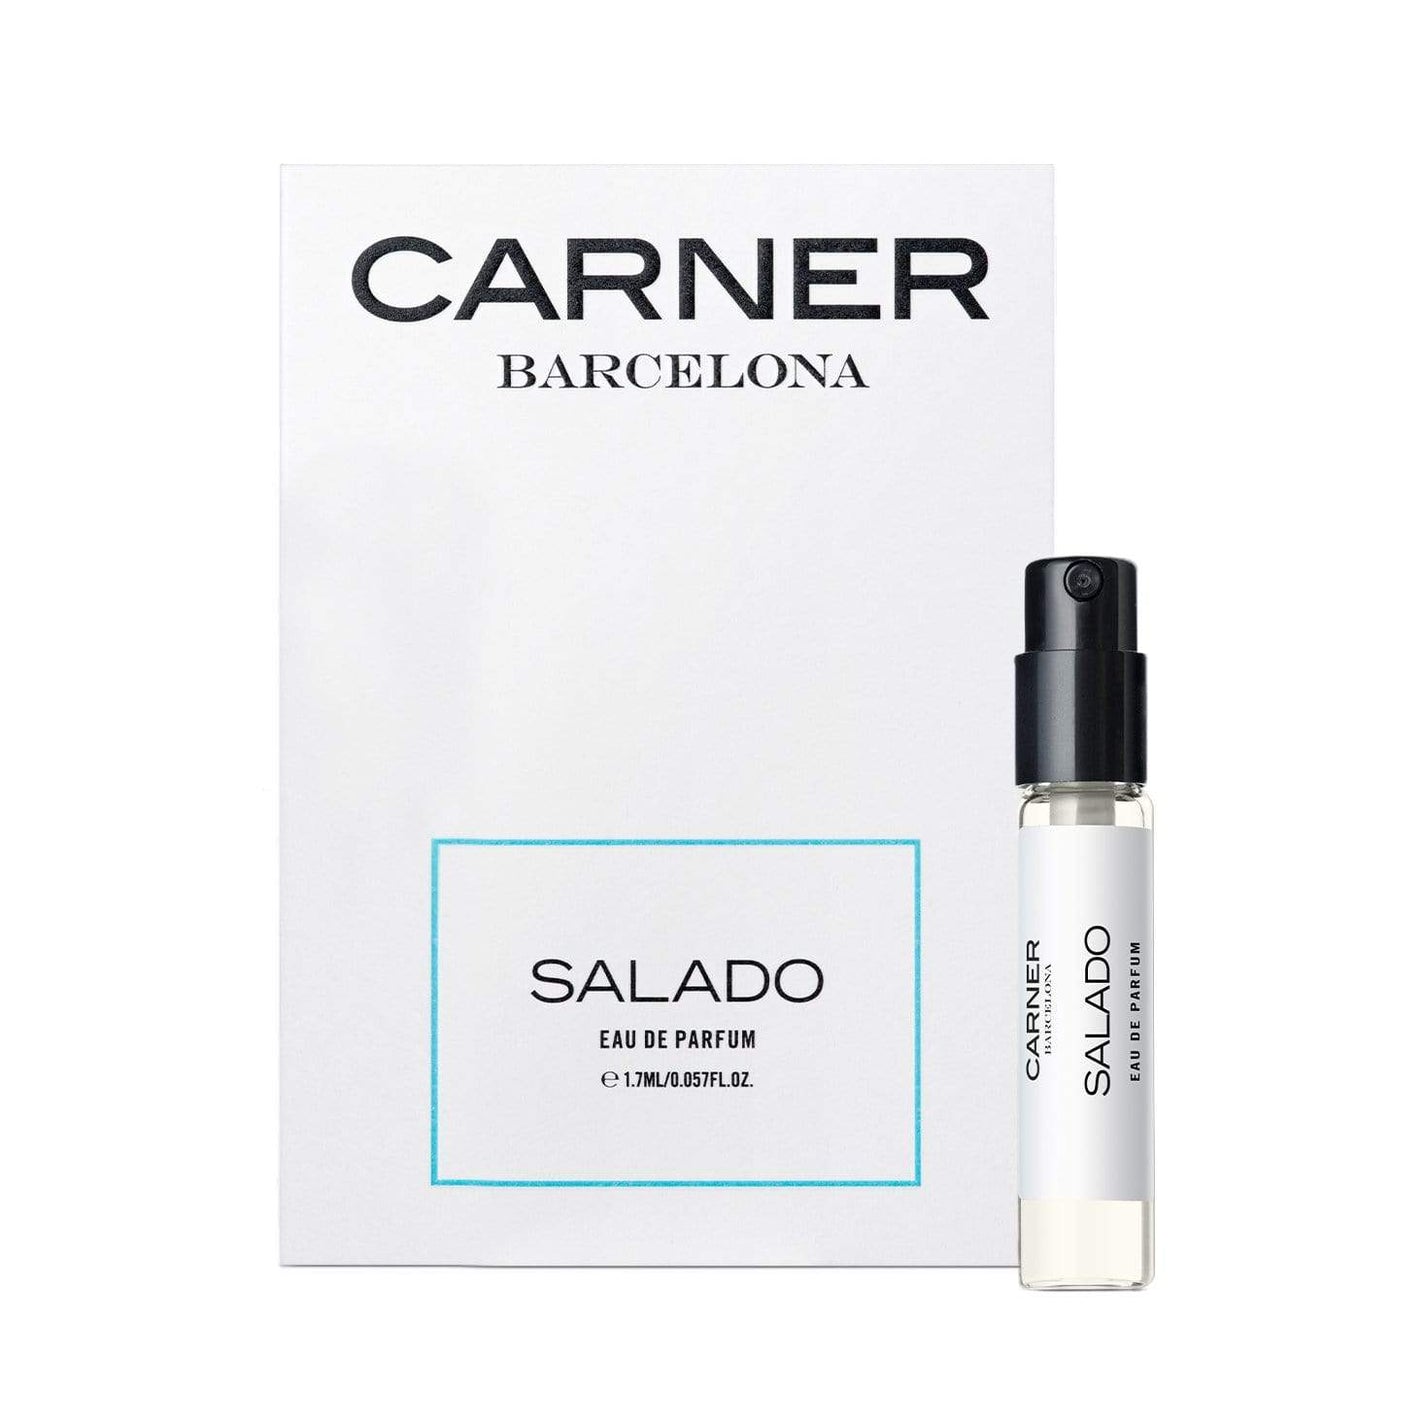 Sample Vial - CARNER BARCELONA Salado Eau de Parfum